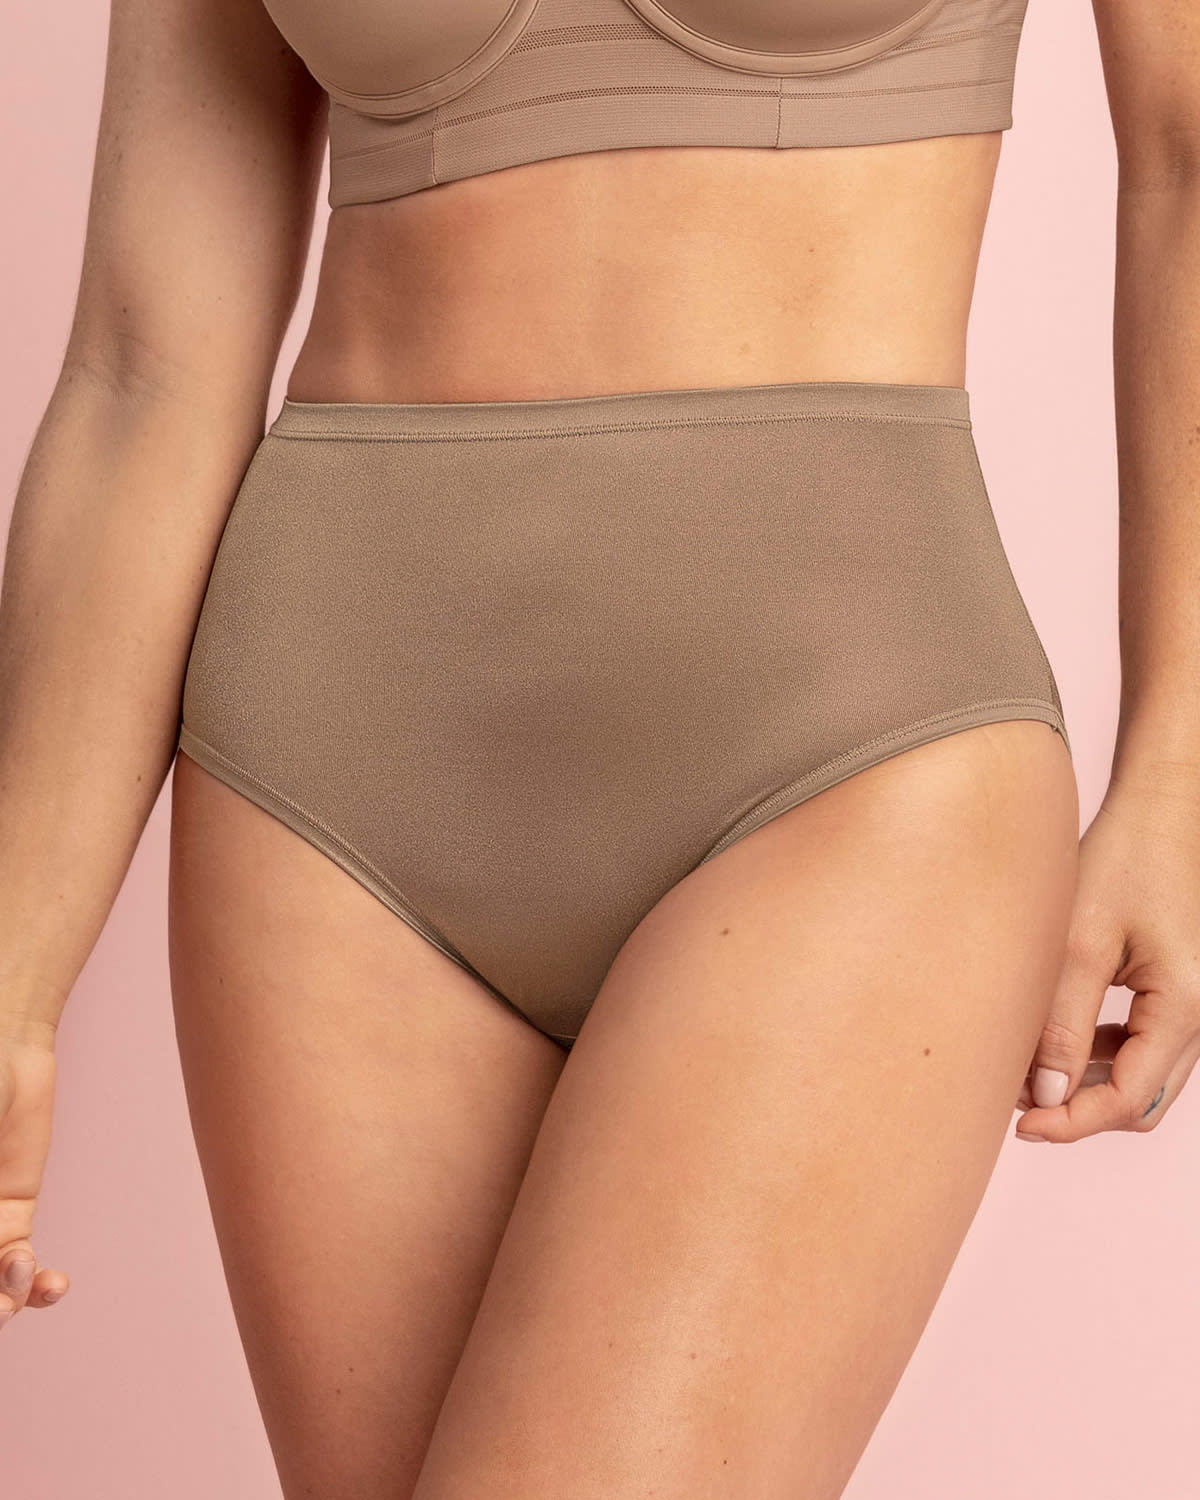 Leonisa Basics Perfect Fit Classic Shaper Panty for Women - Size